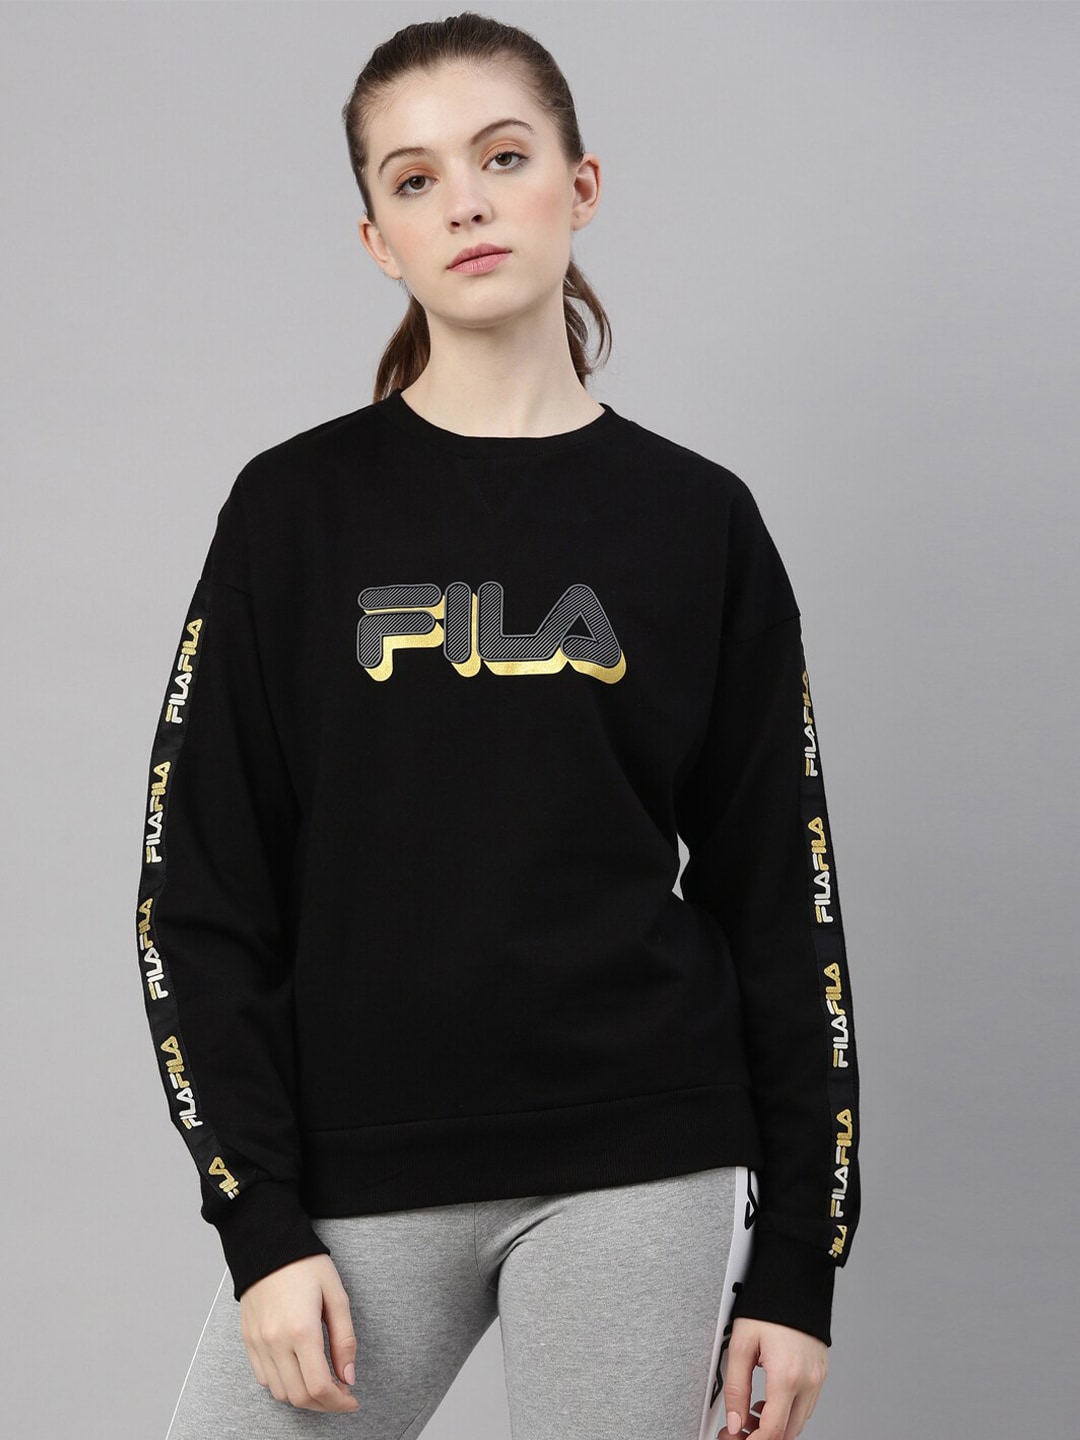 FILA Women Black & Grey Printed Pure Cotton Sweatshirt Price in India